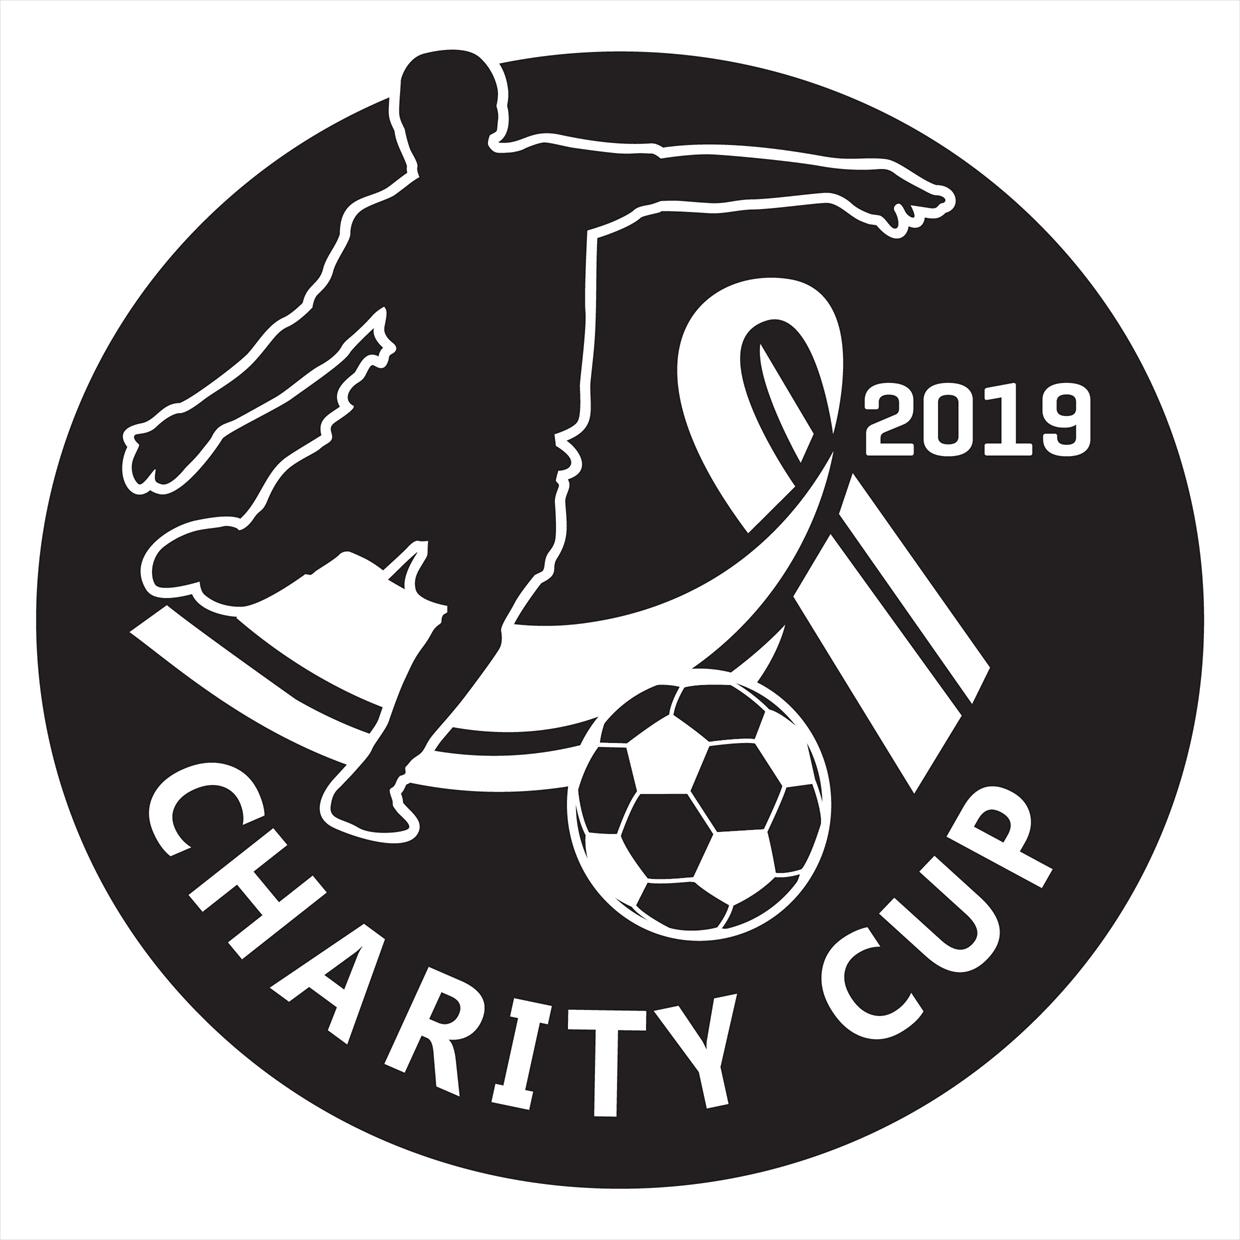 Eswatini Charity Cup Pic